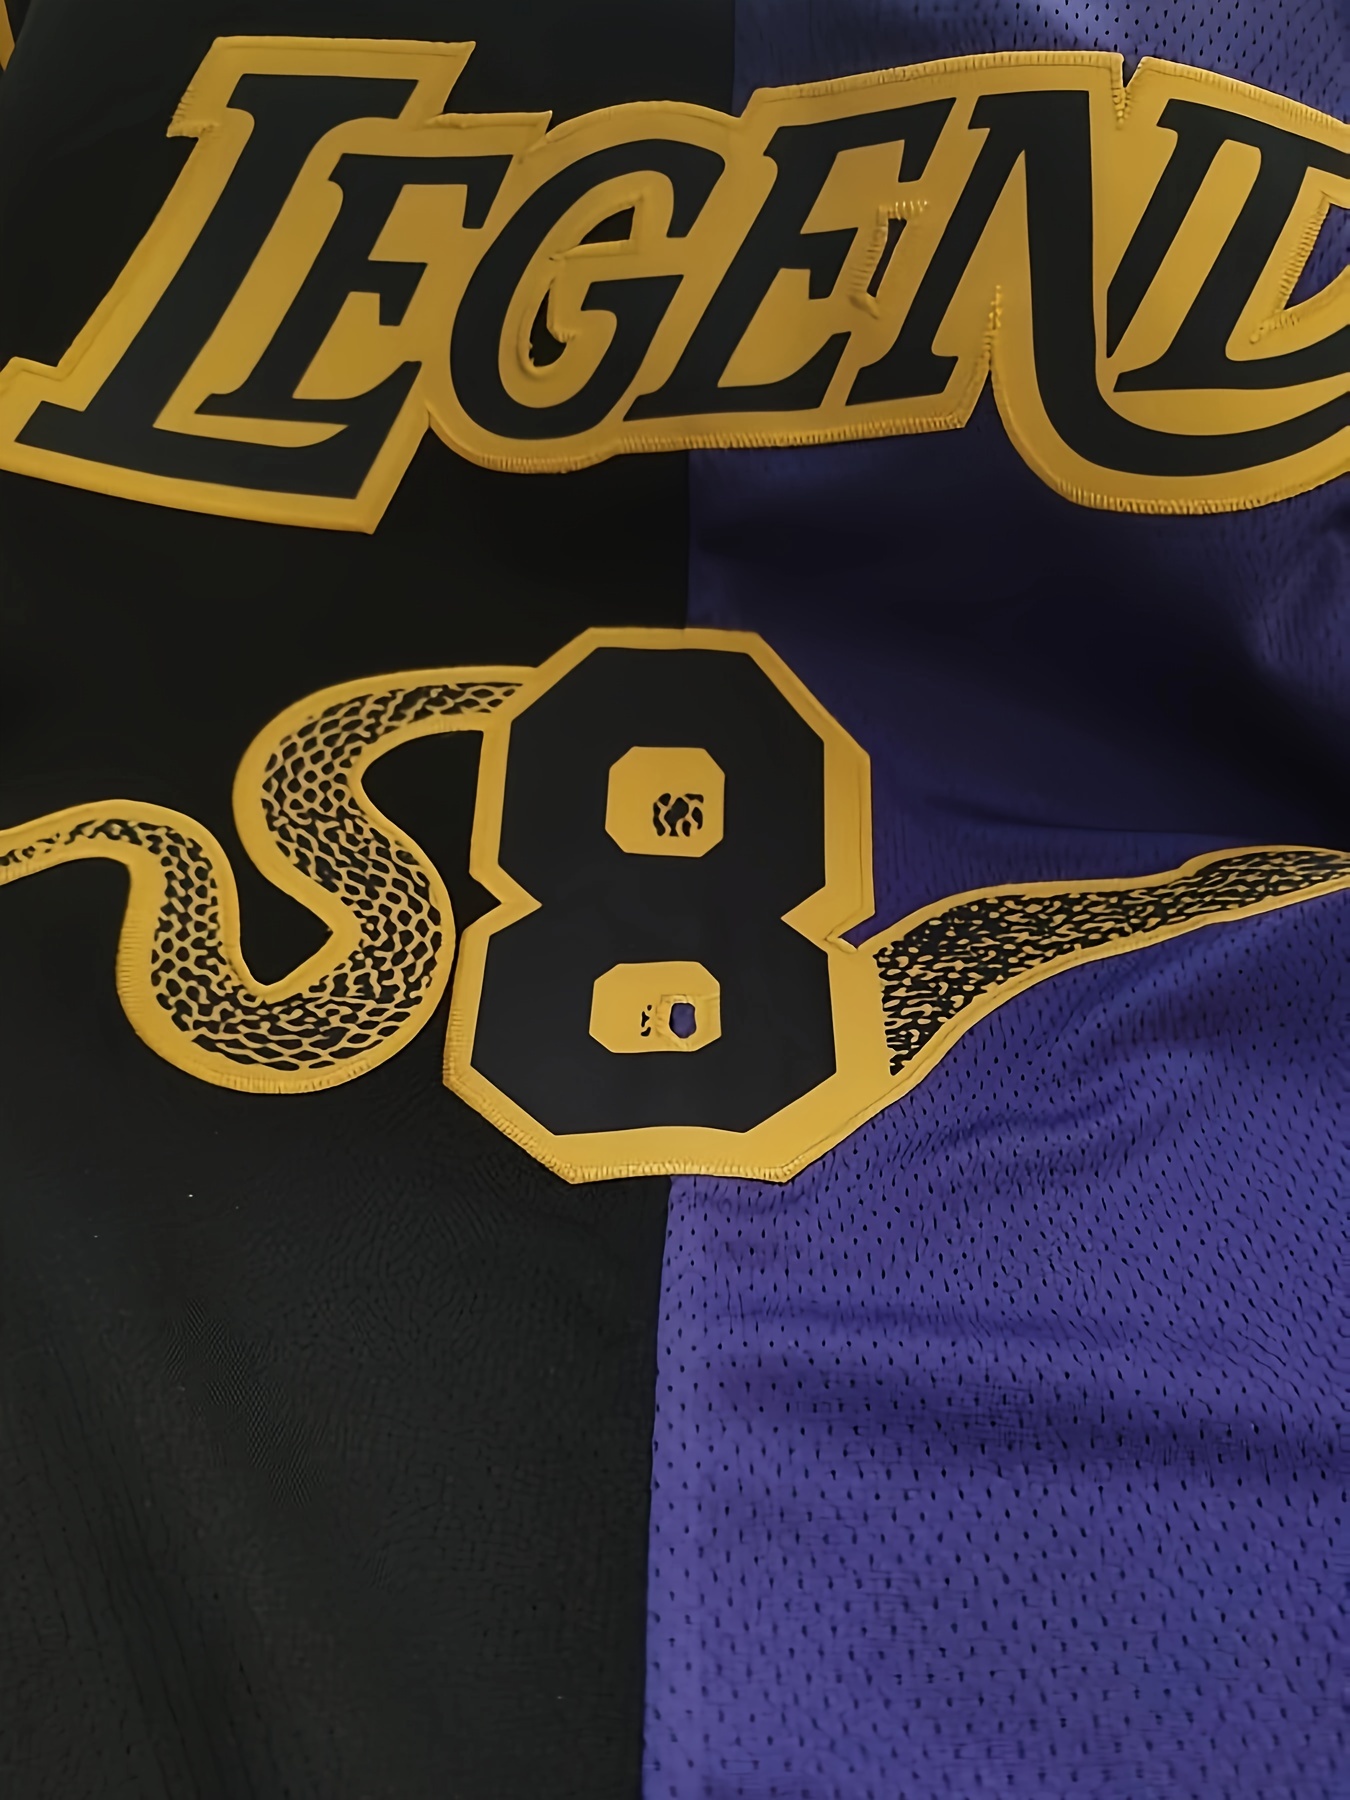 Men's Legend #824 Embroidered Basketball Jersey, Retro Slightly